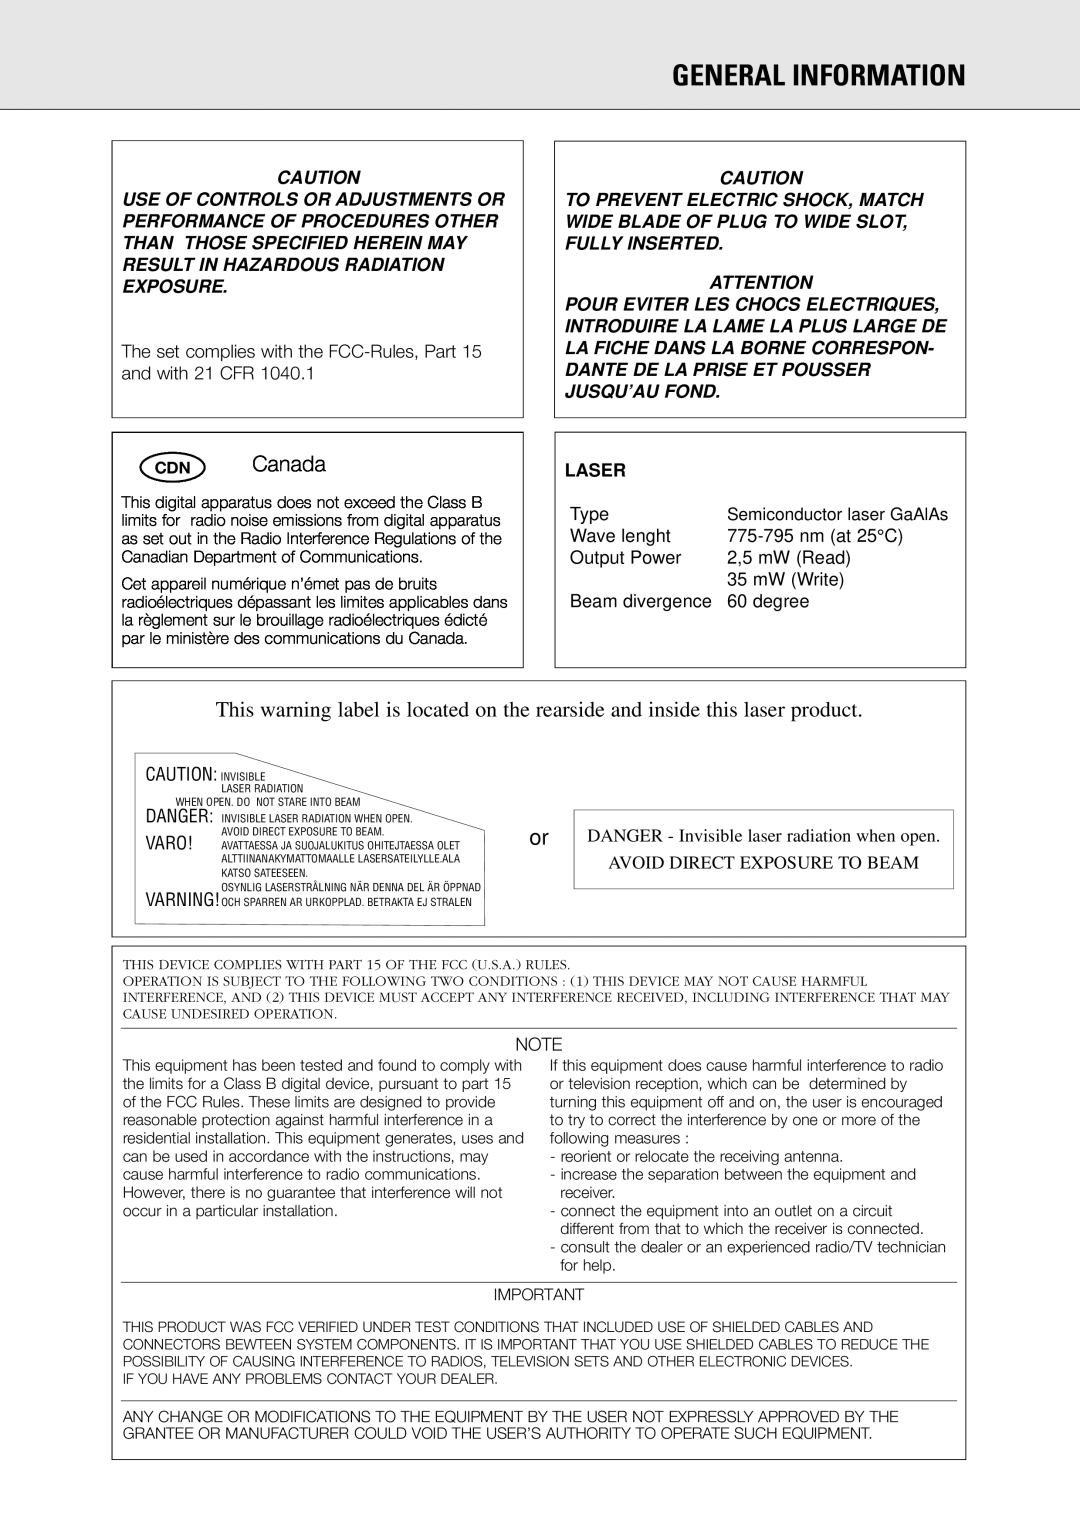 Philips CDR570 manual General Information, CDN Canada, Laser 